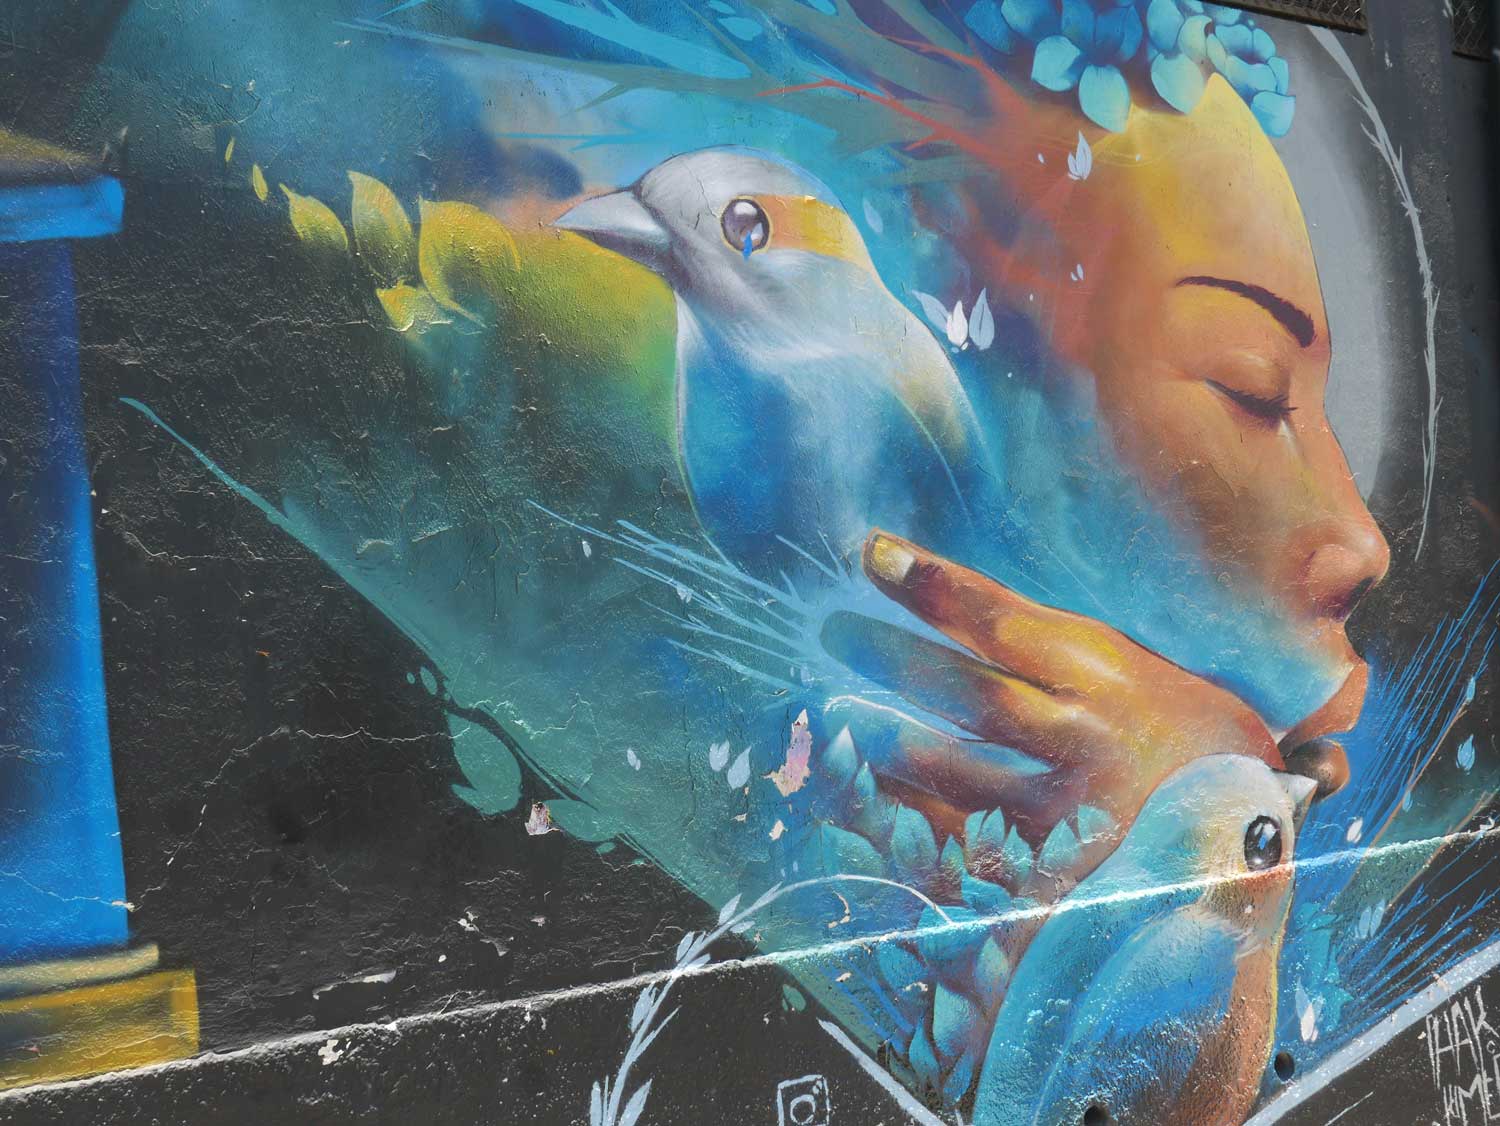 Street art in San Jose, Costa Rica. Near university